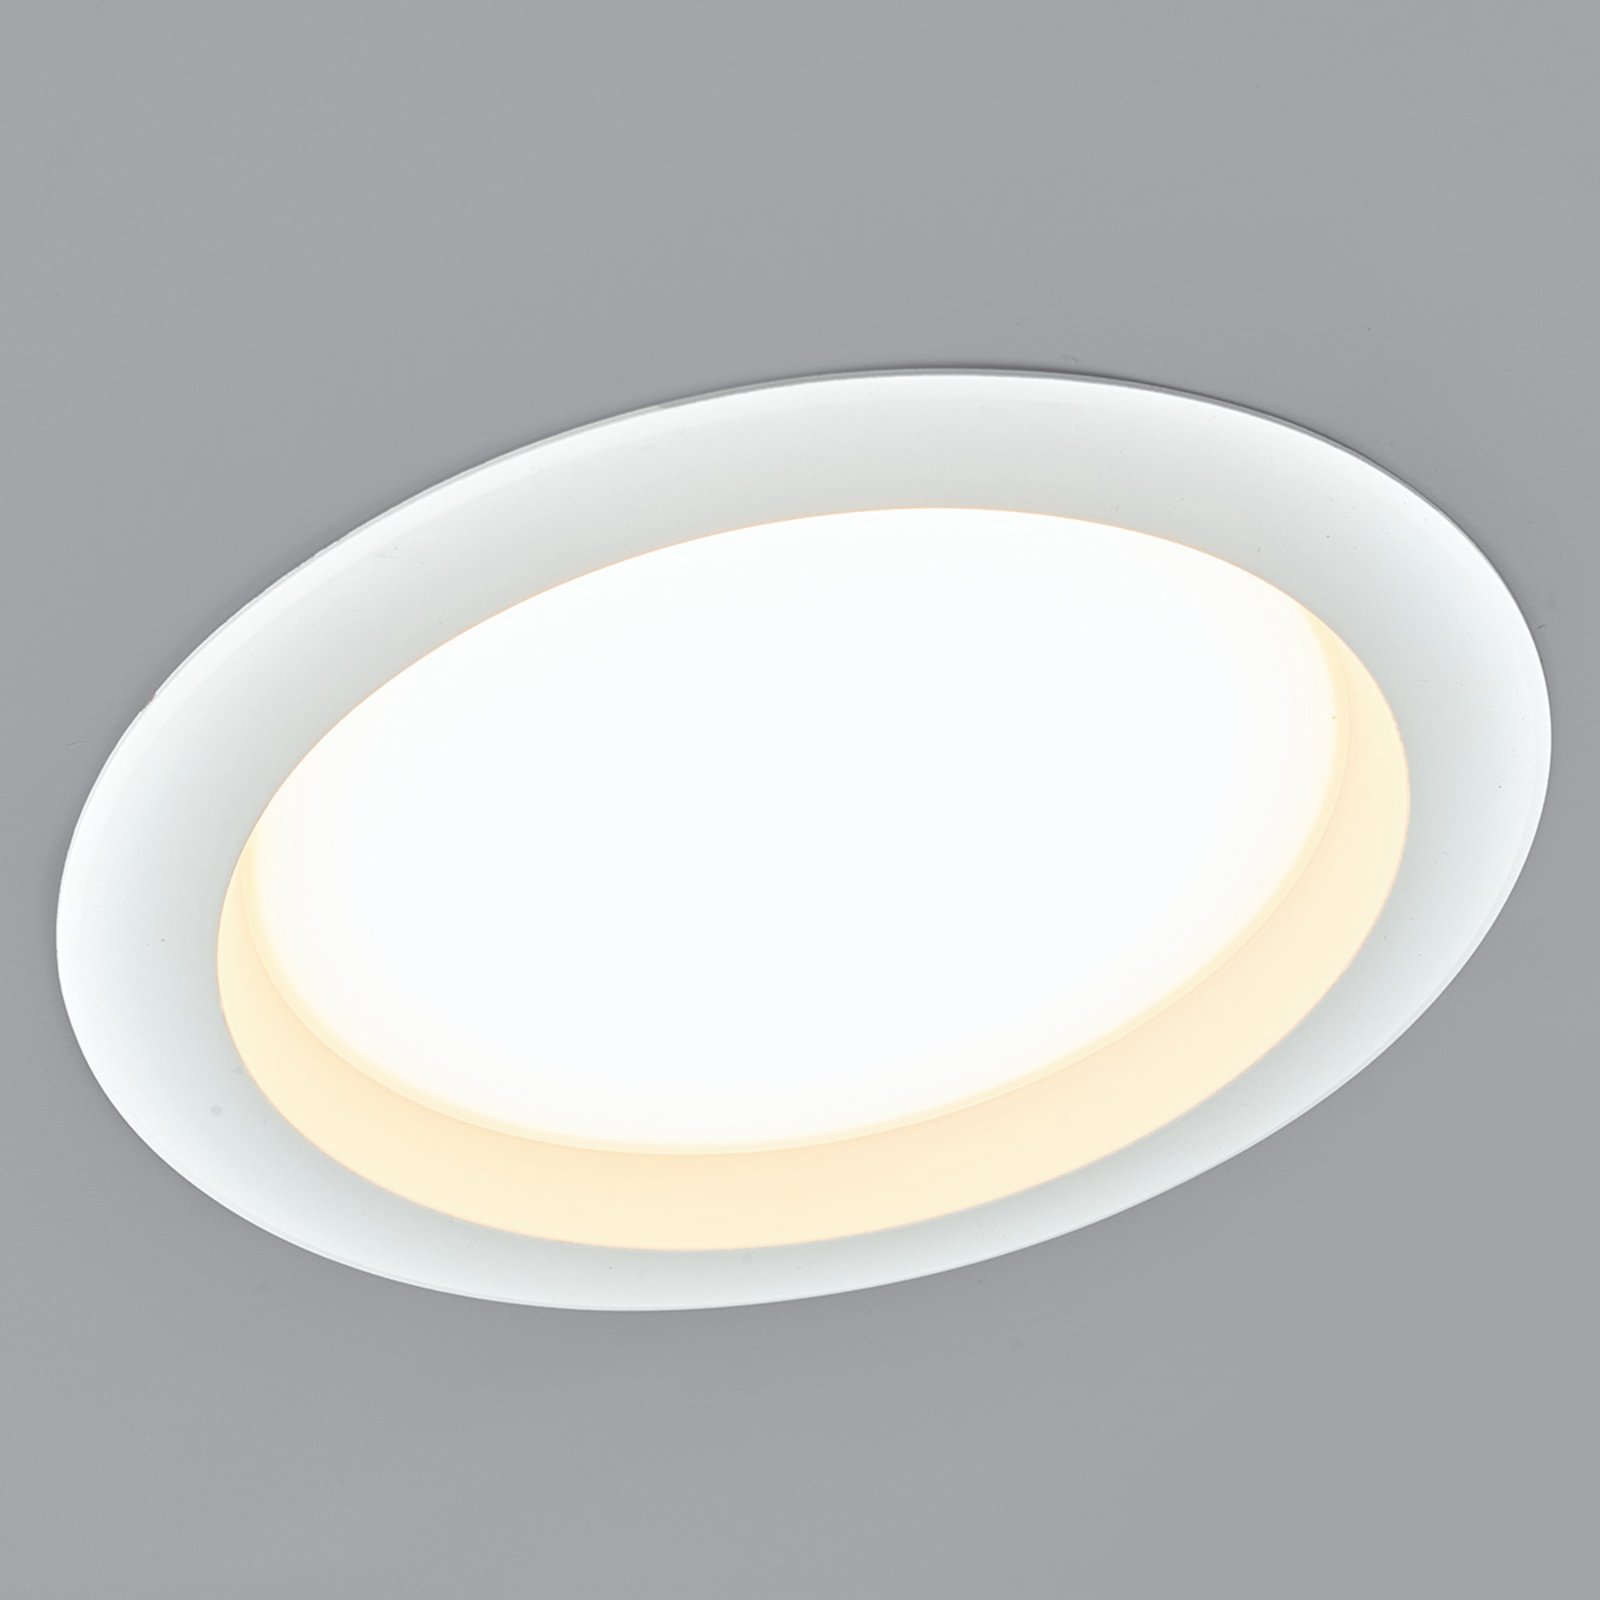 Grand spot encastrable LED Arian, 24,4 cm, 22,5 W